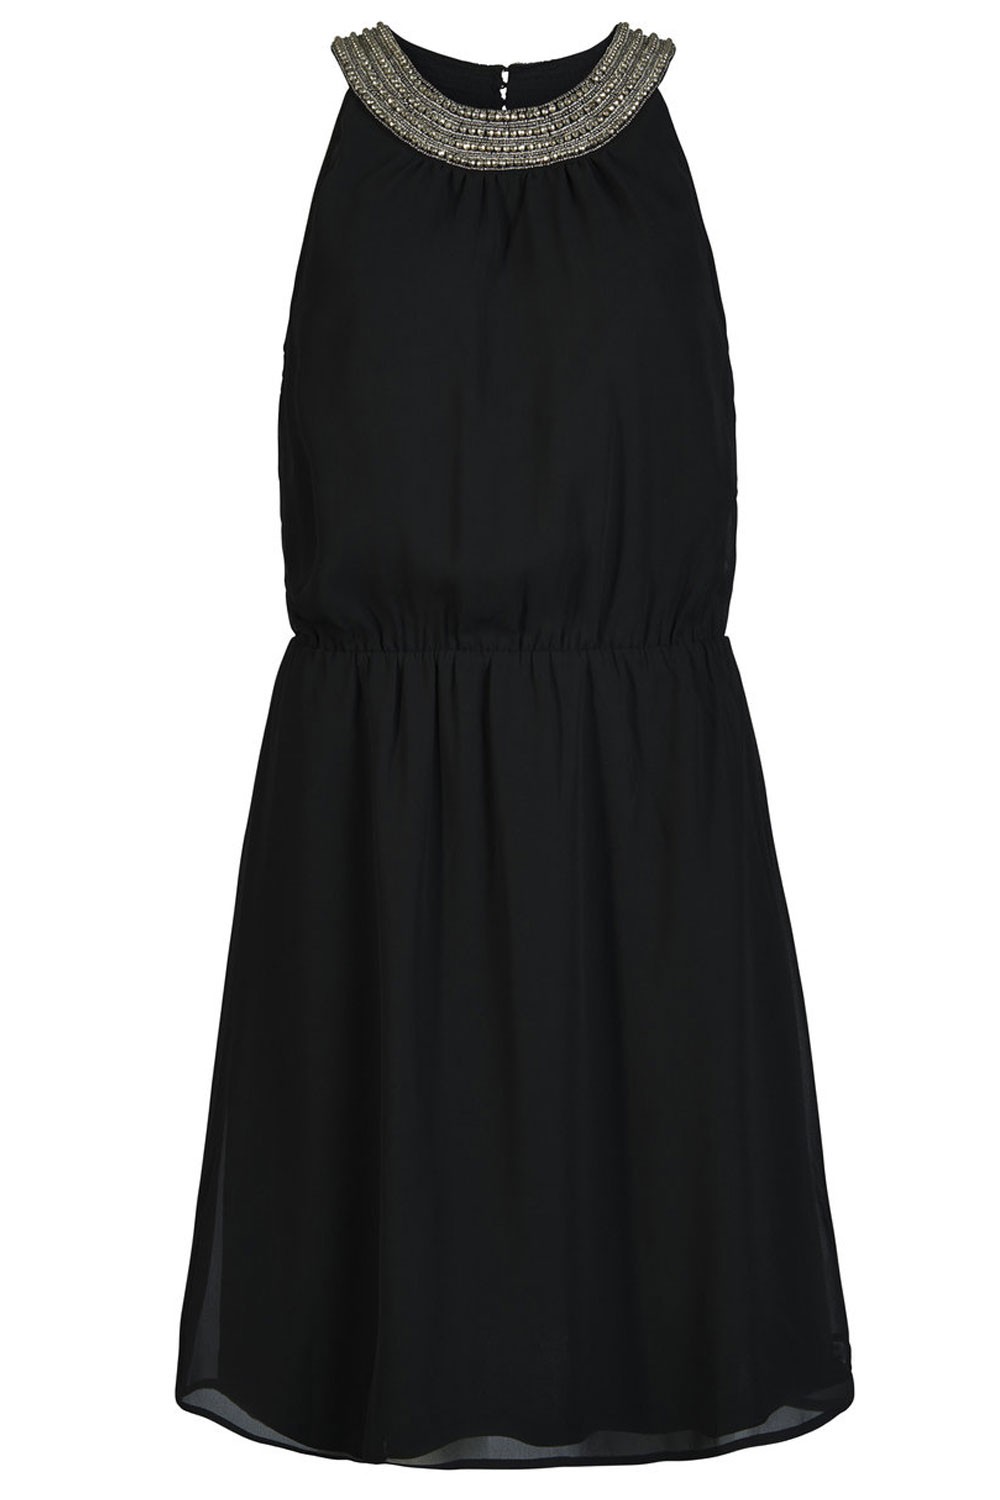 Only Novita Embellished Chiffon Dress in Black | iCLOTHING